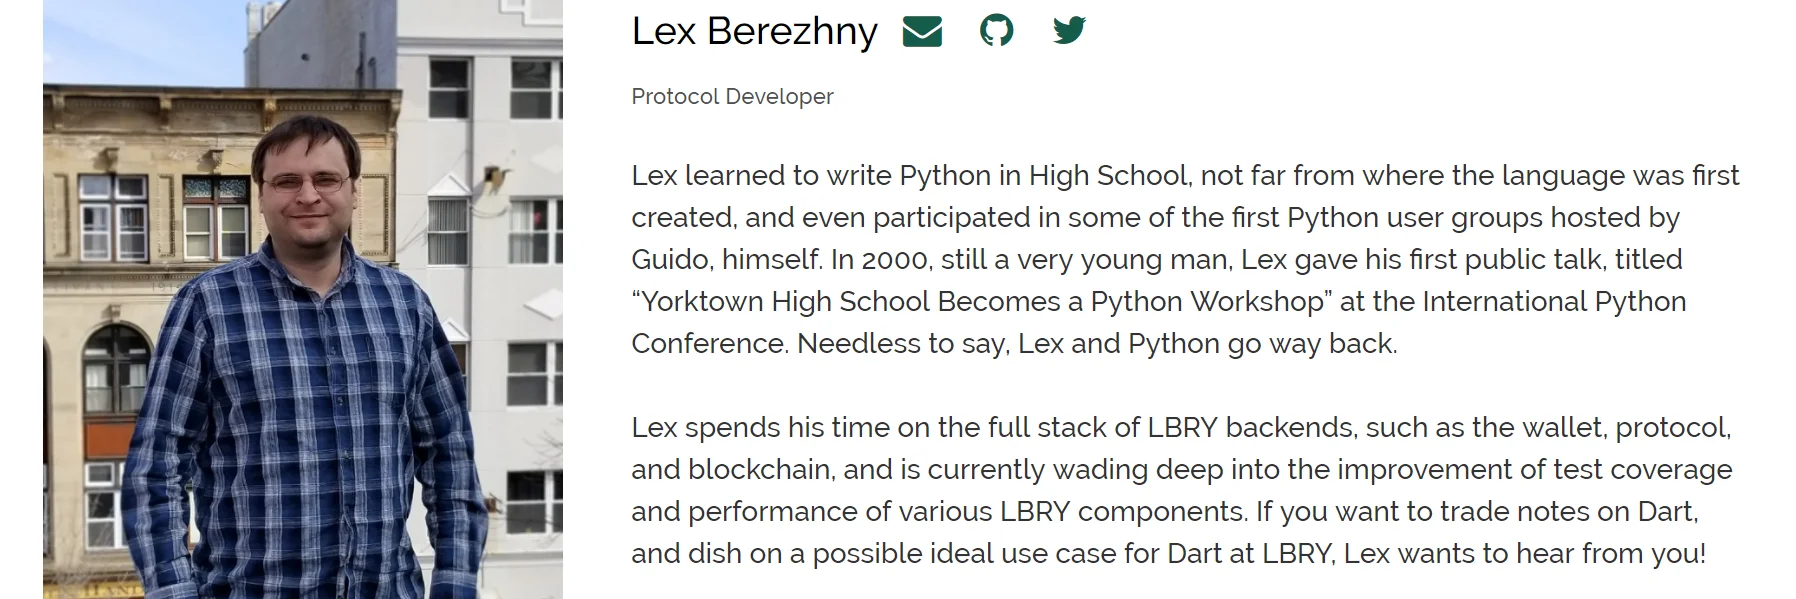 Lex profile page